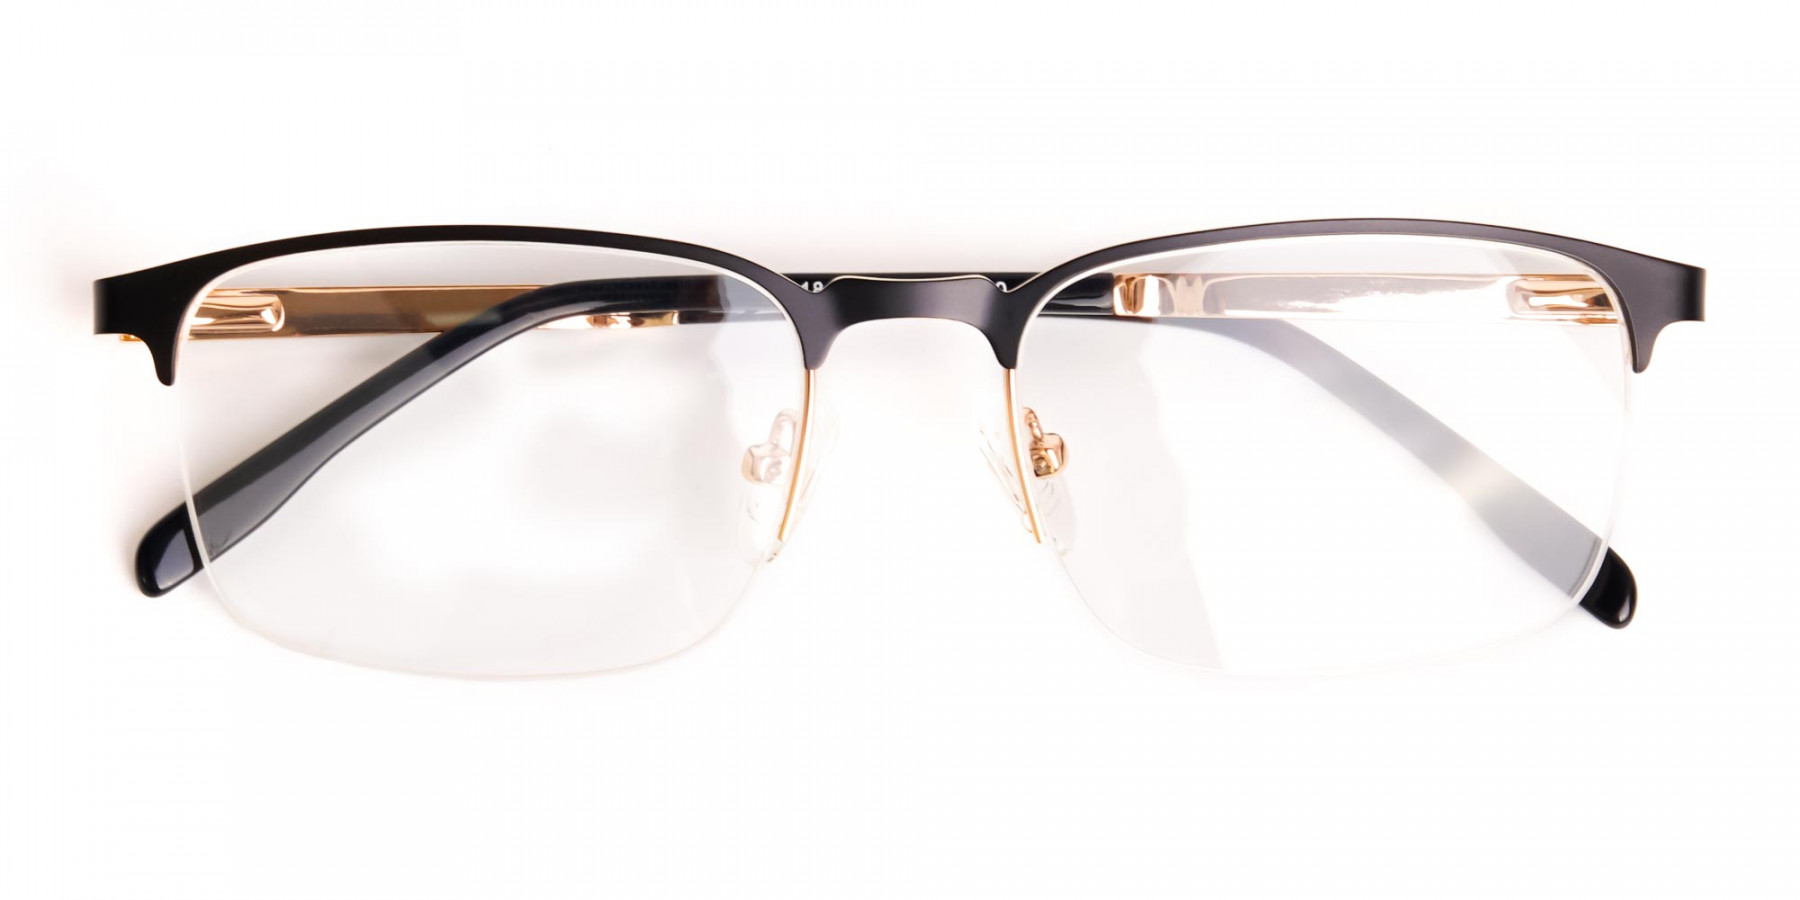 black-and-gold-rectangular-half-rim-glasses-frames-1